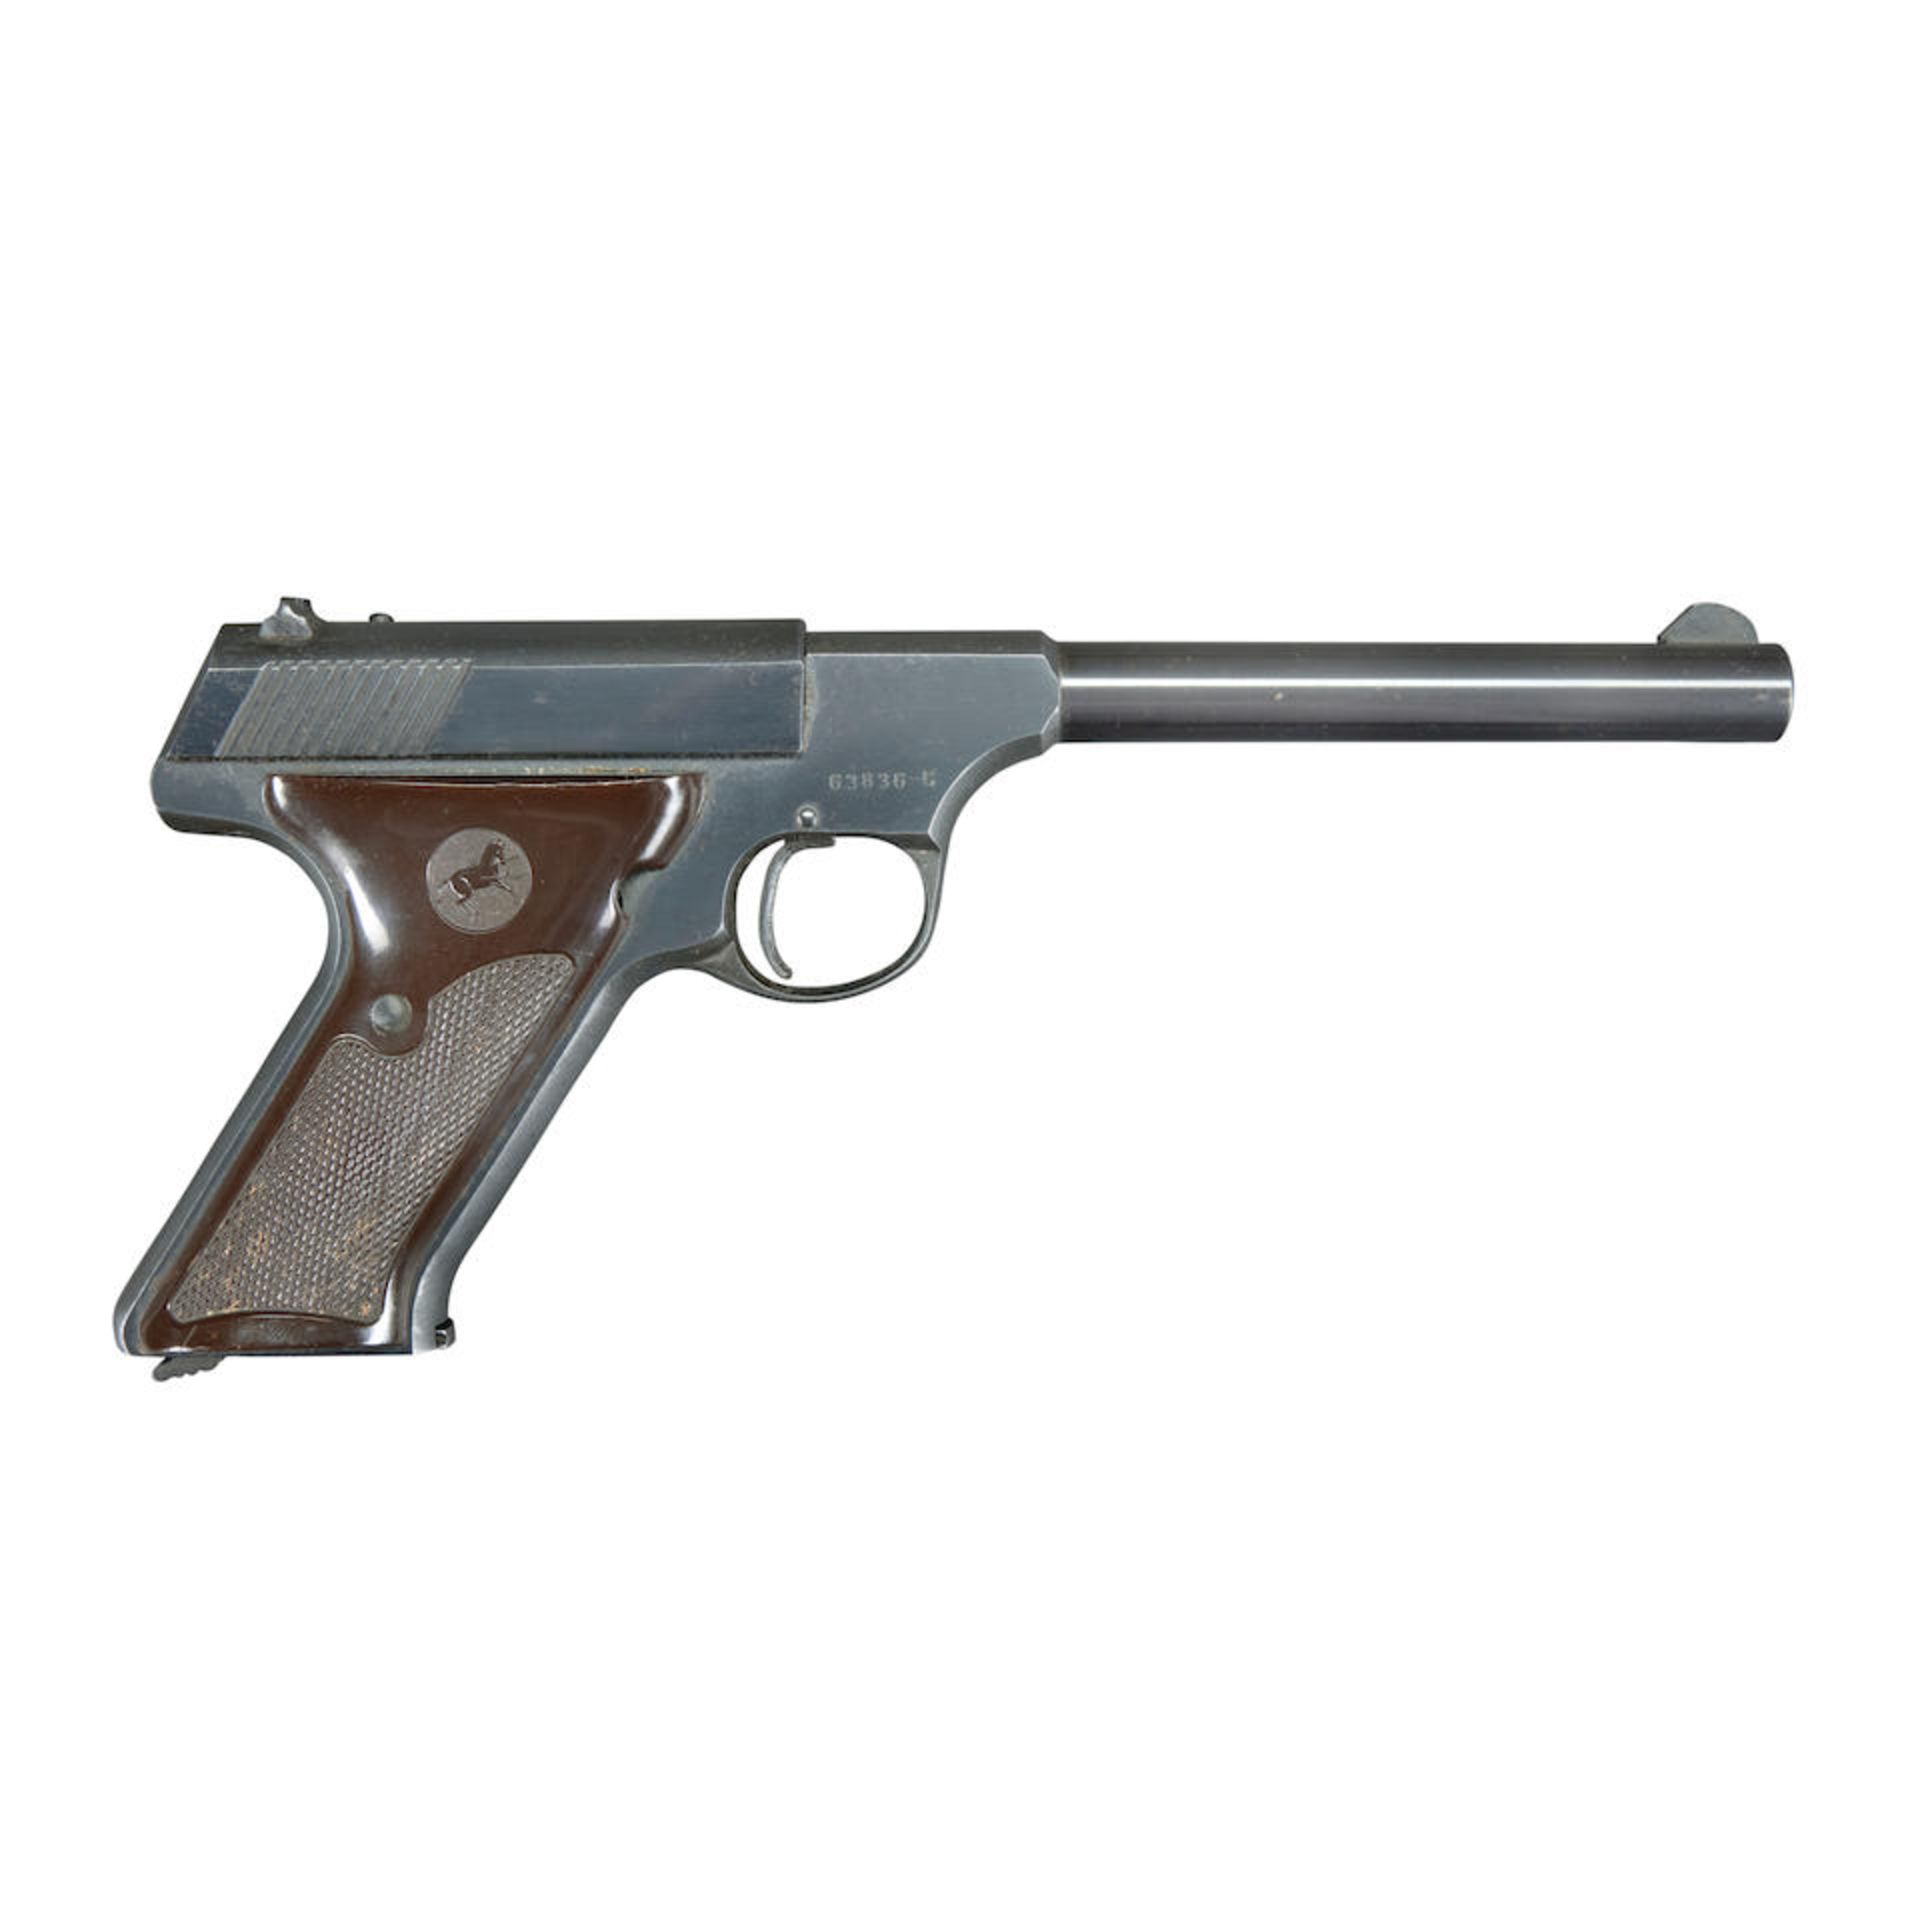 Colt Challenger Semi-Automatic Target Pistol. Curio or Relic firearm